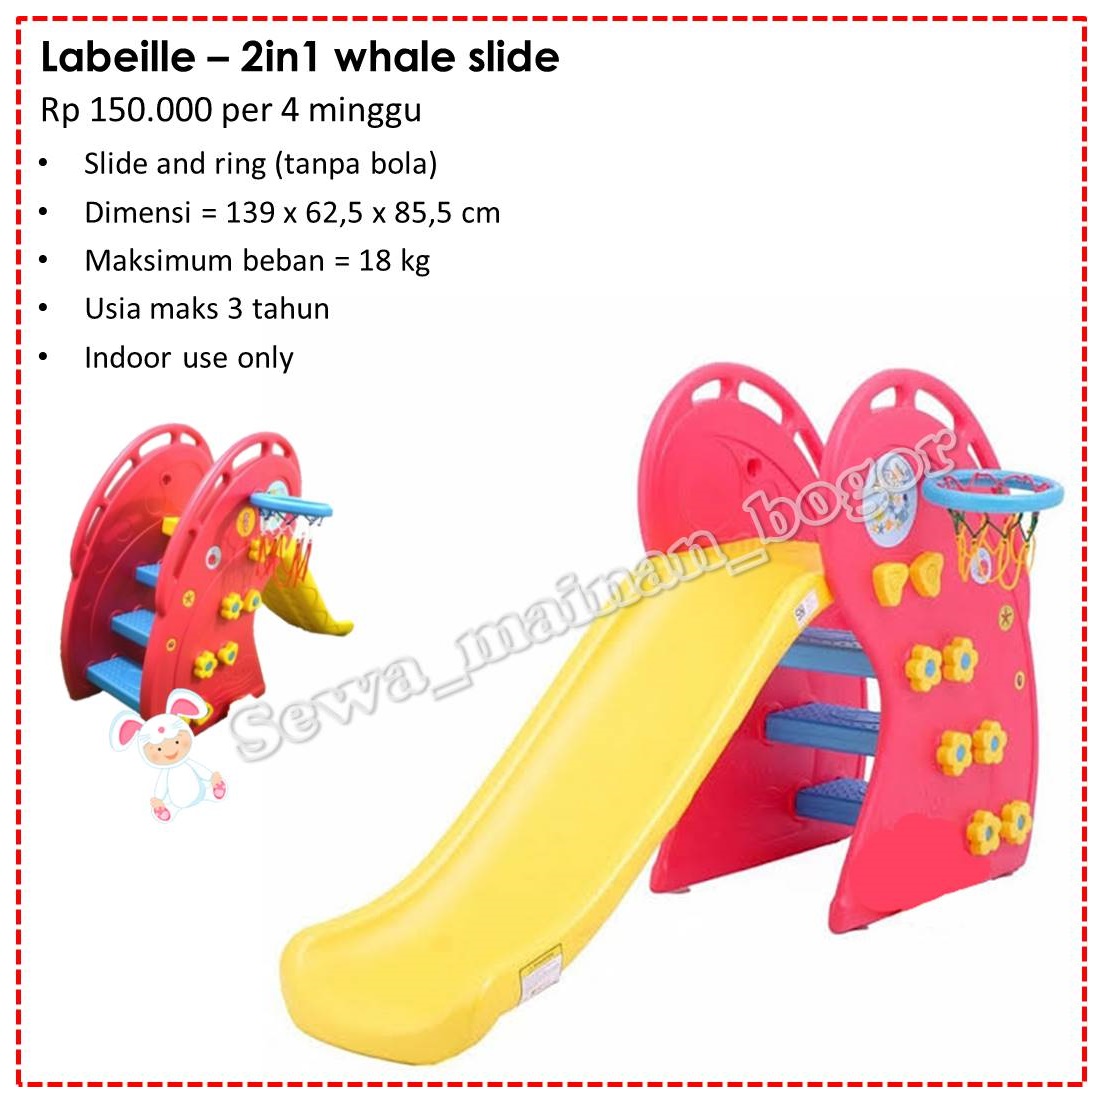 Labeille - Whale Slide